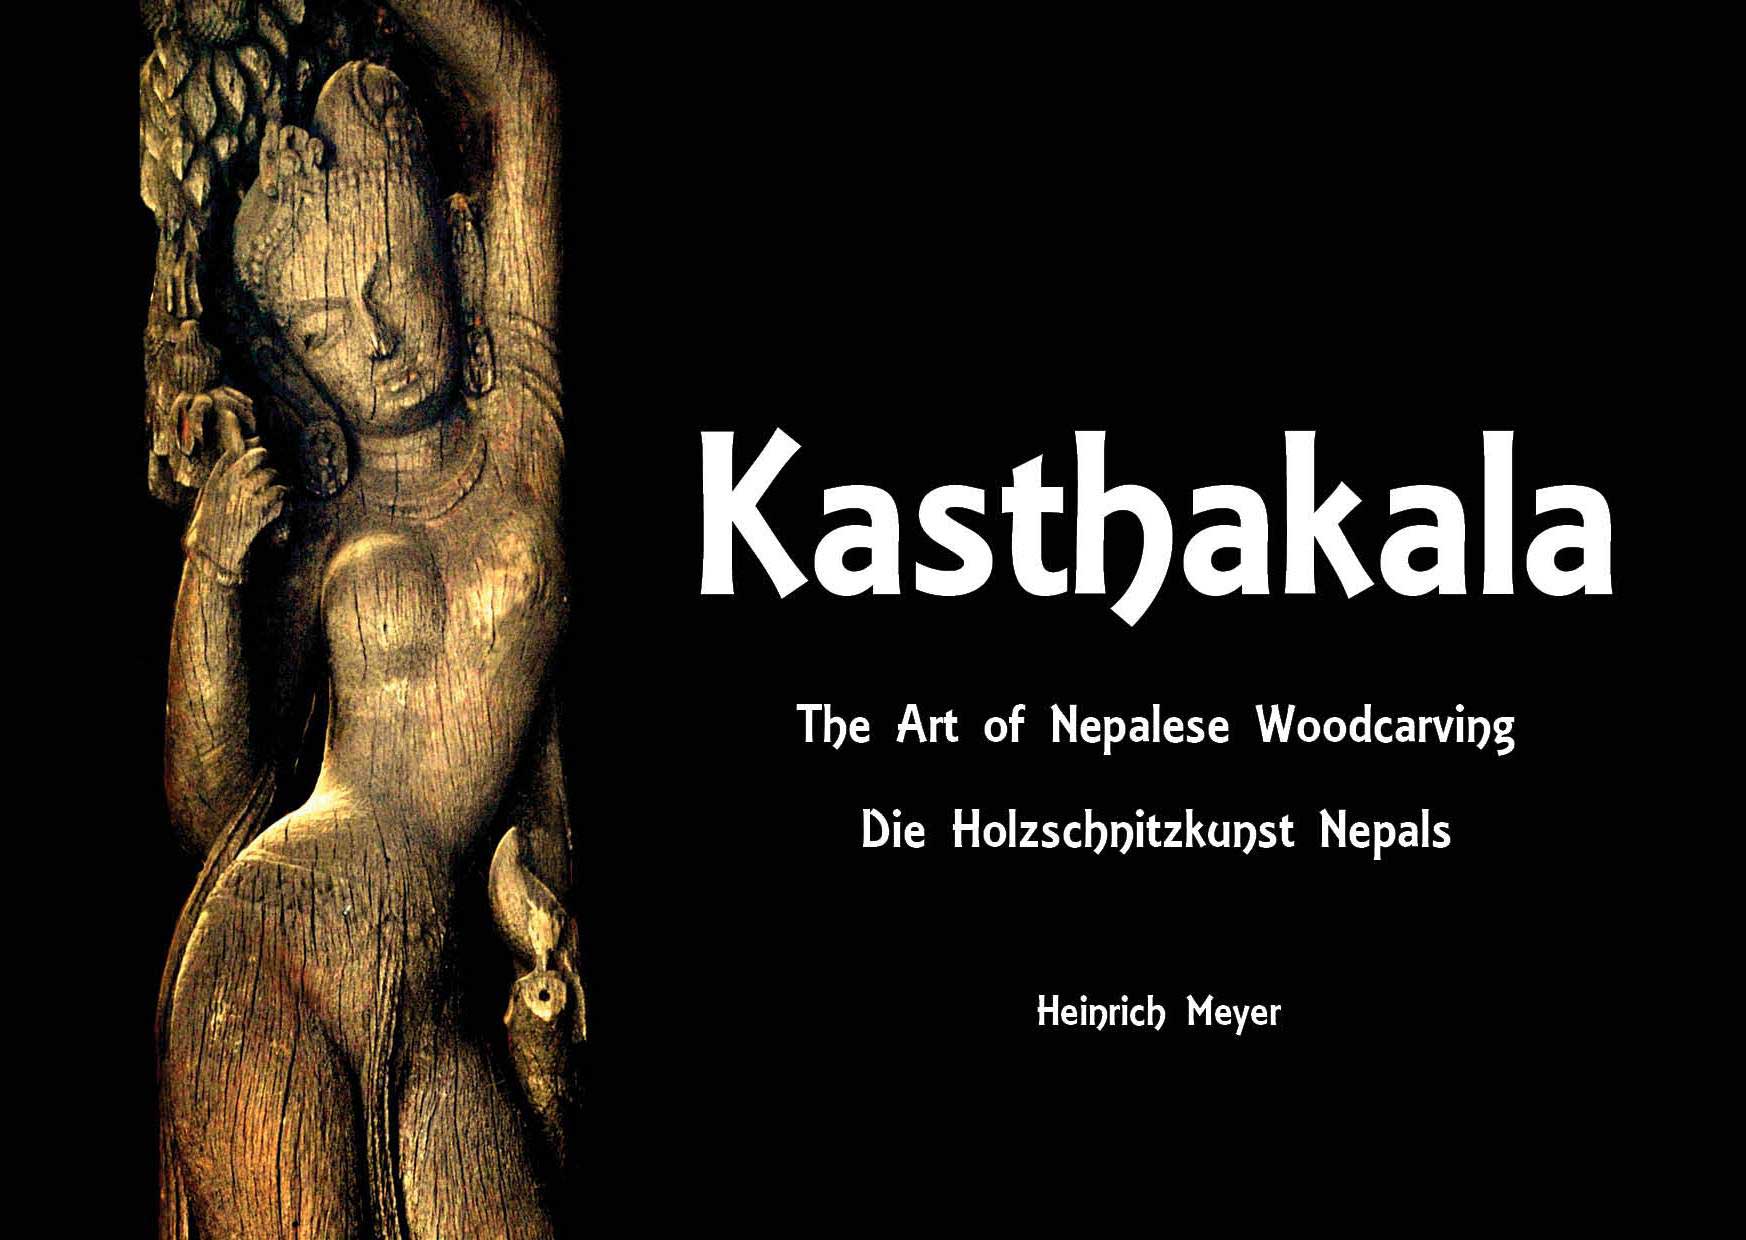 Kasthakala: The Art of Nepalese Woodcarving